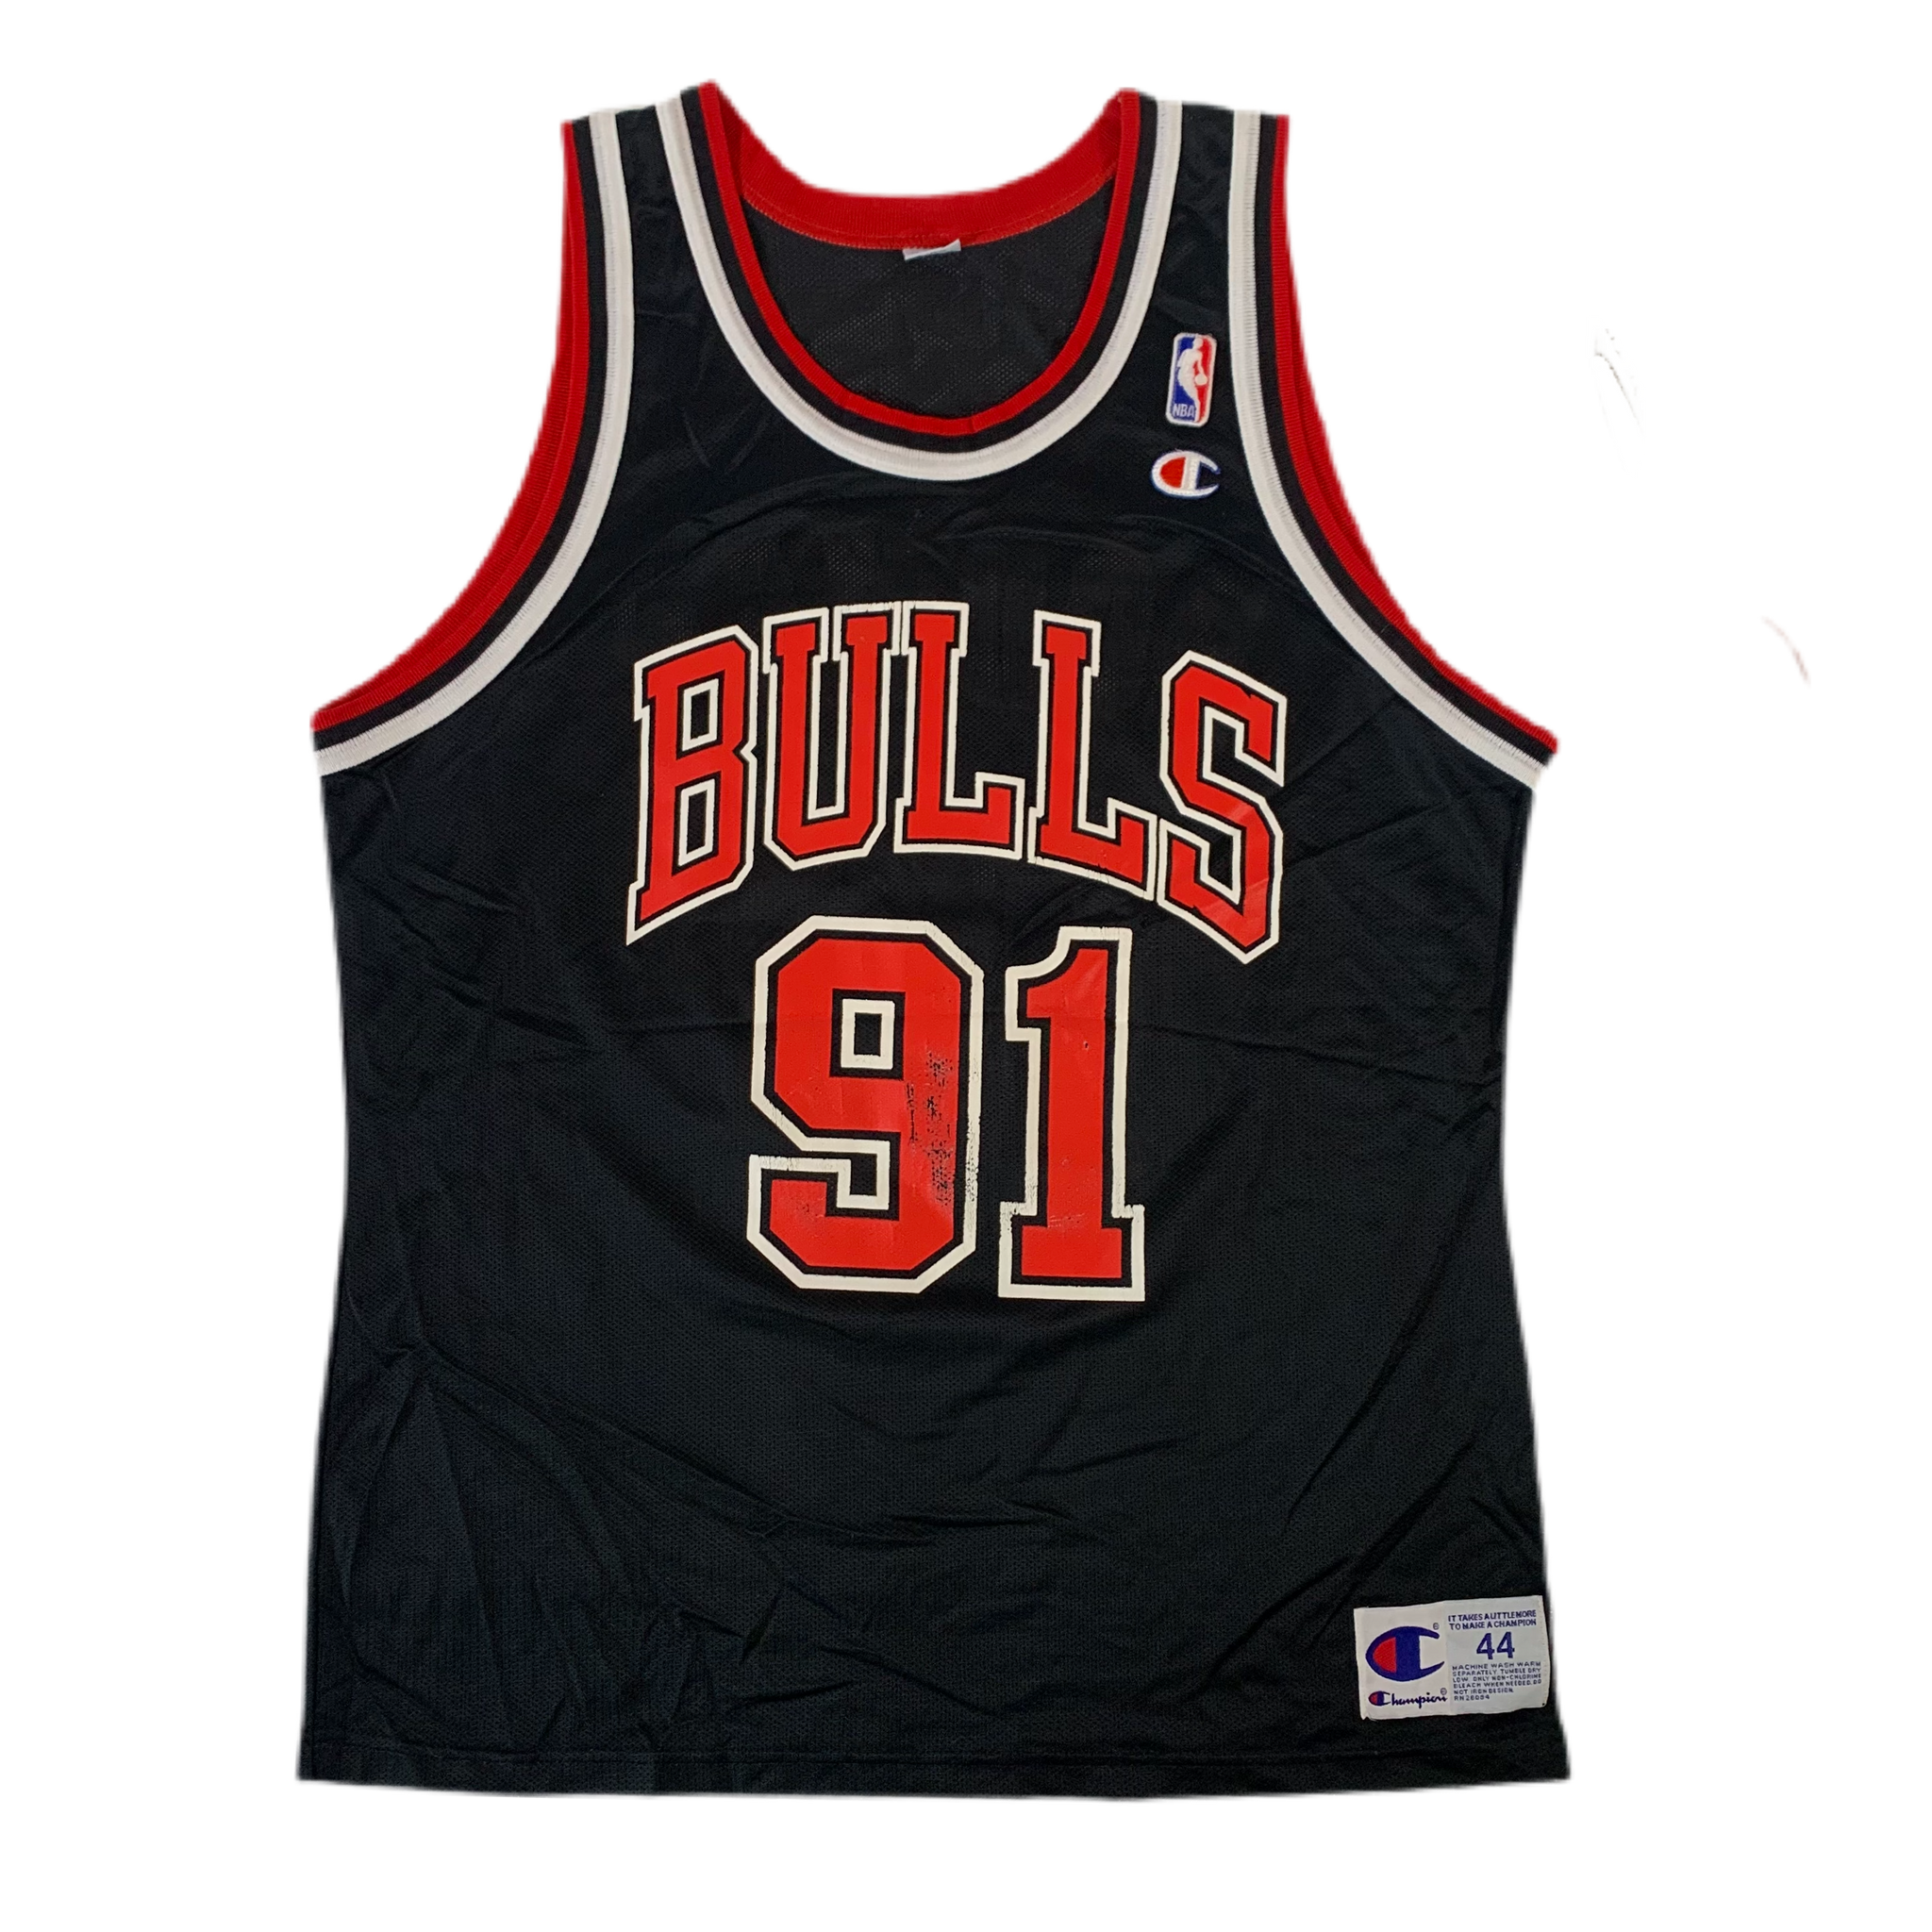 NBA Dennis Chicago Bulls Champion Jersey Dennis Rodman # 91 Free Ship